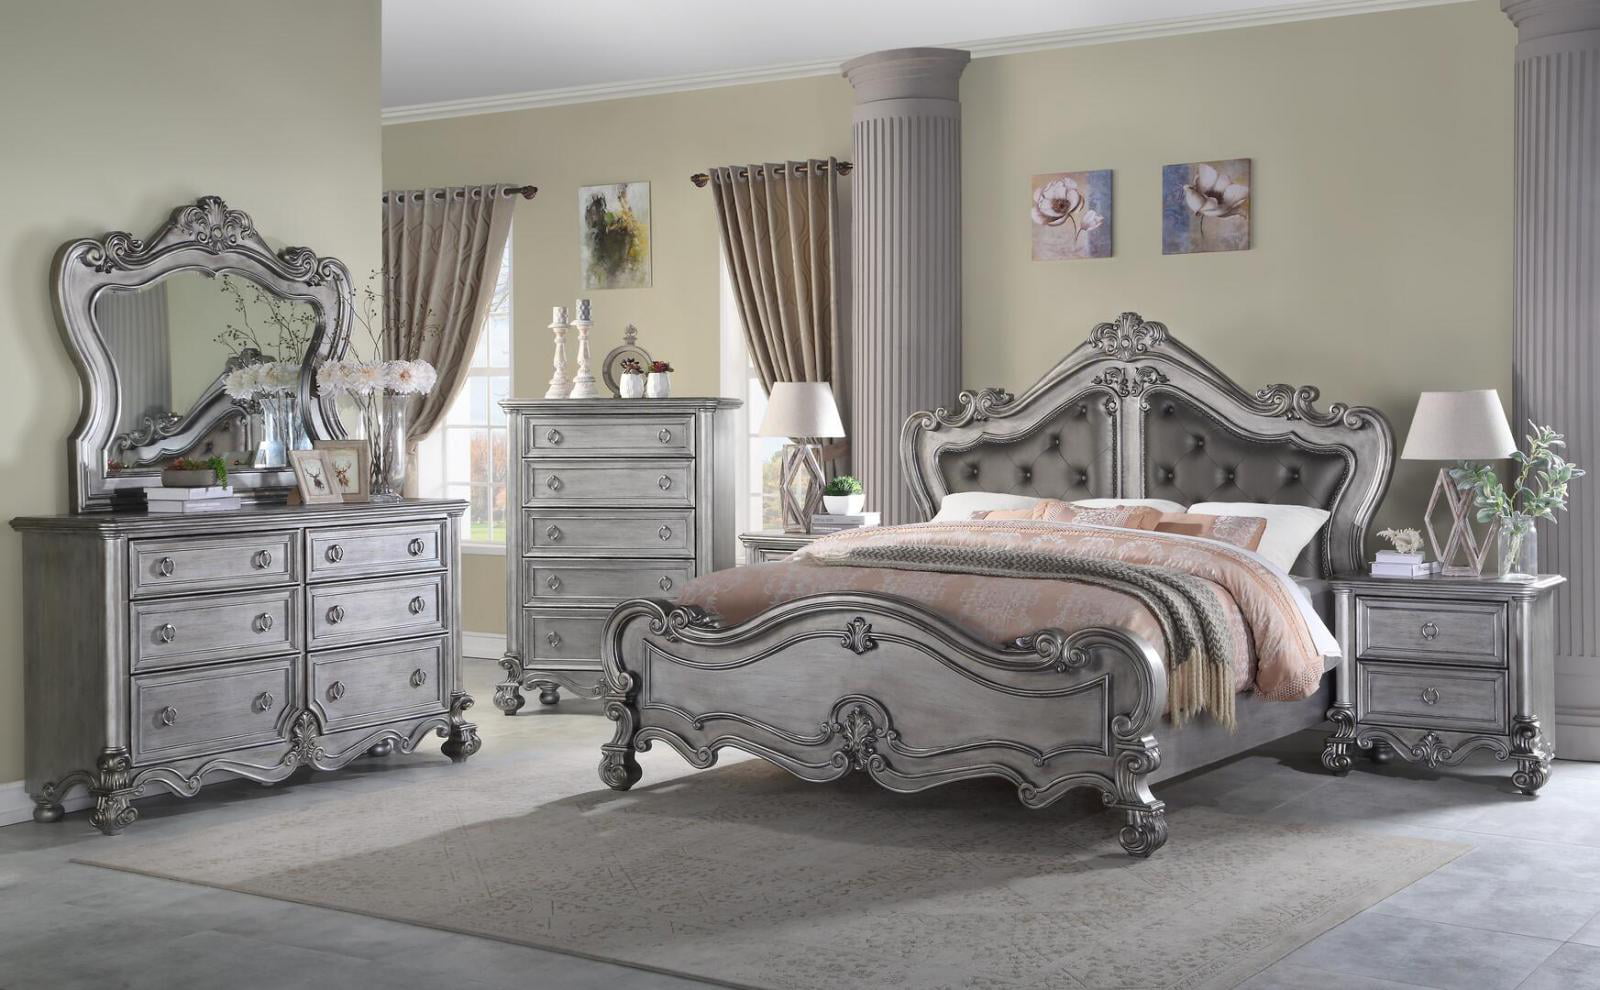 grey wood bedroom furniture